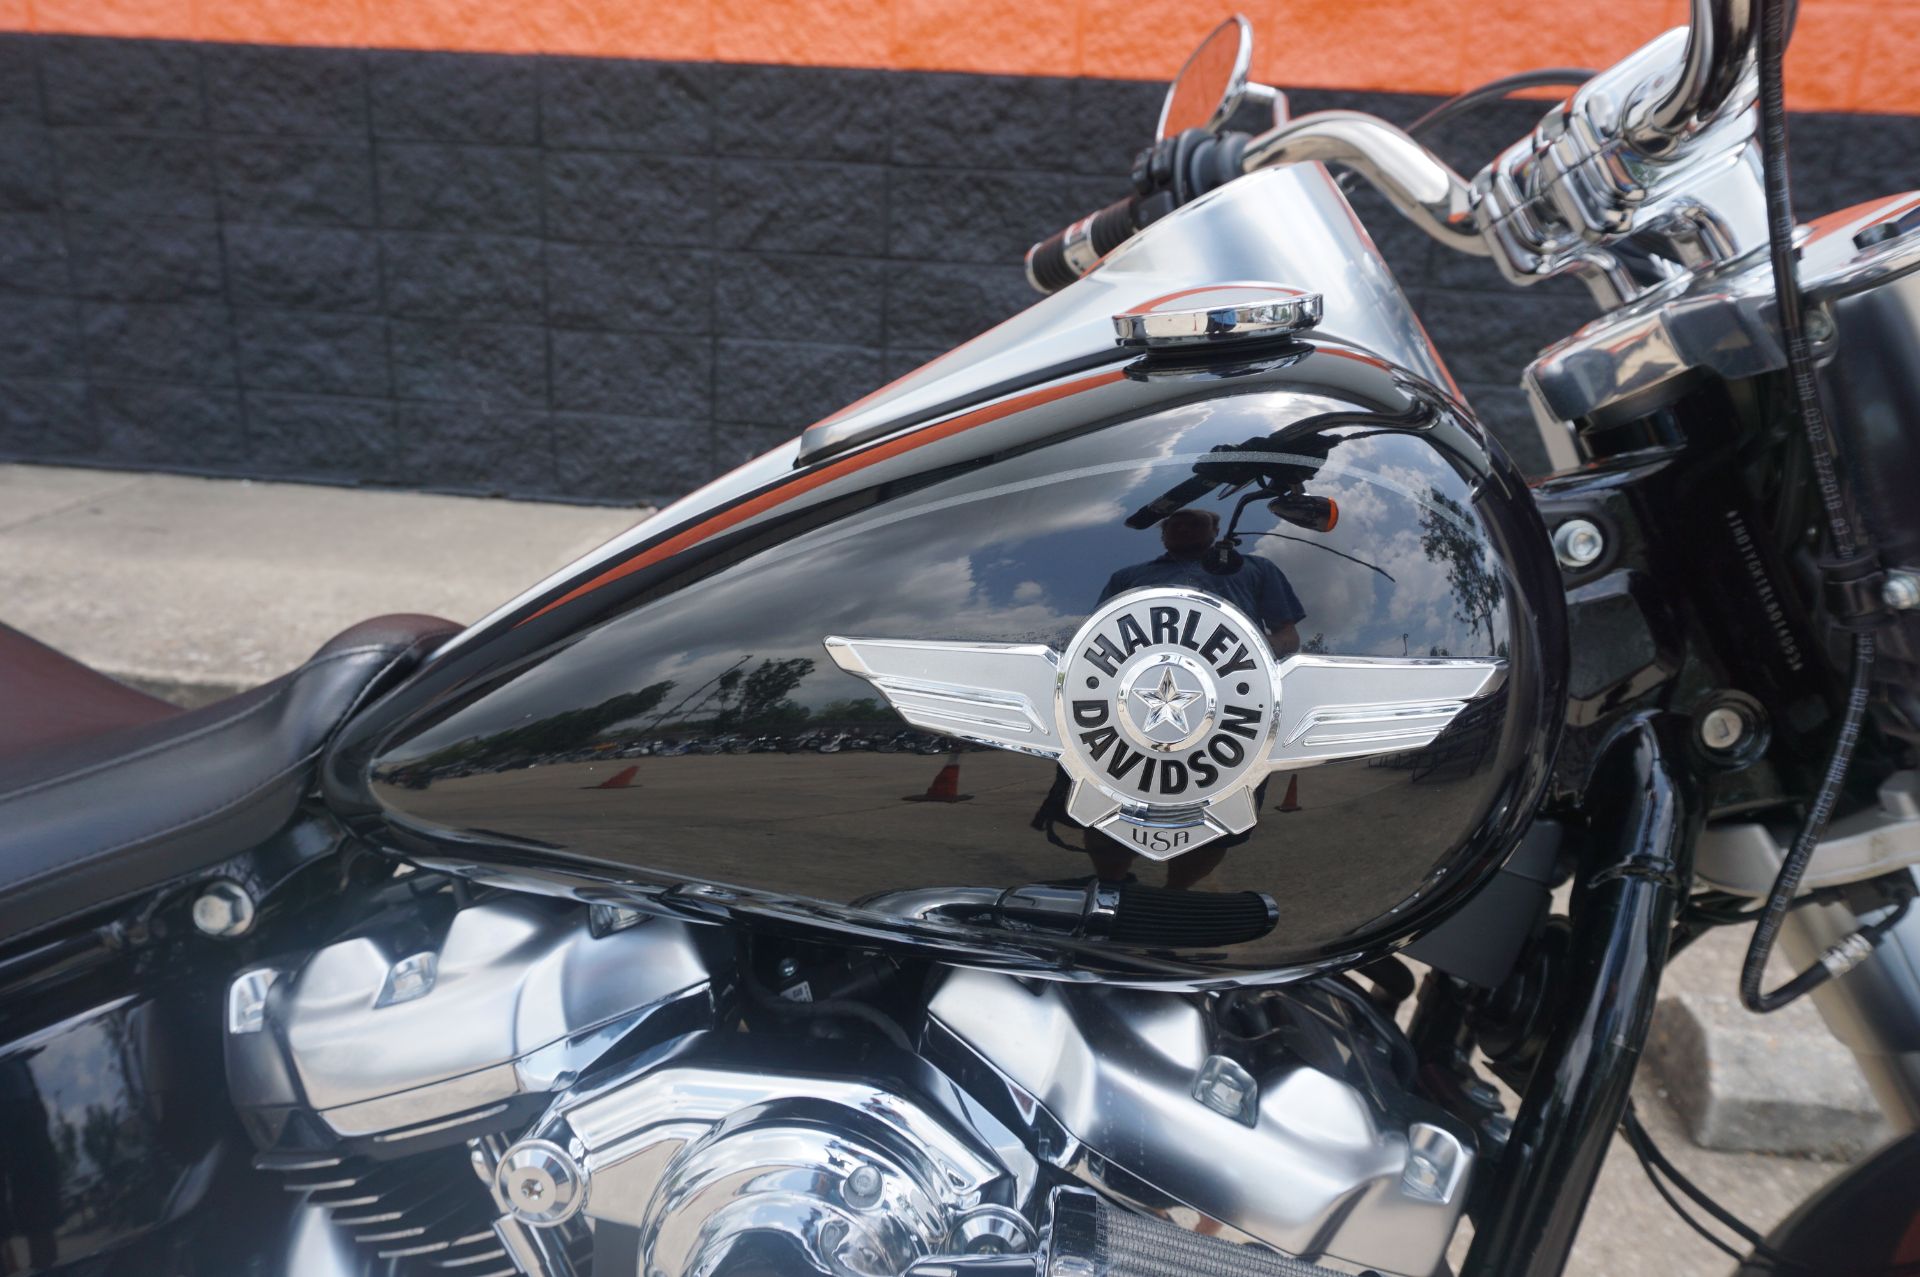 2020 Harley-Davidson Fat Boy® 114 in Metairie, Louisiana - Photo 3